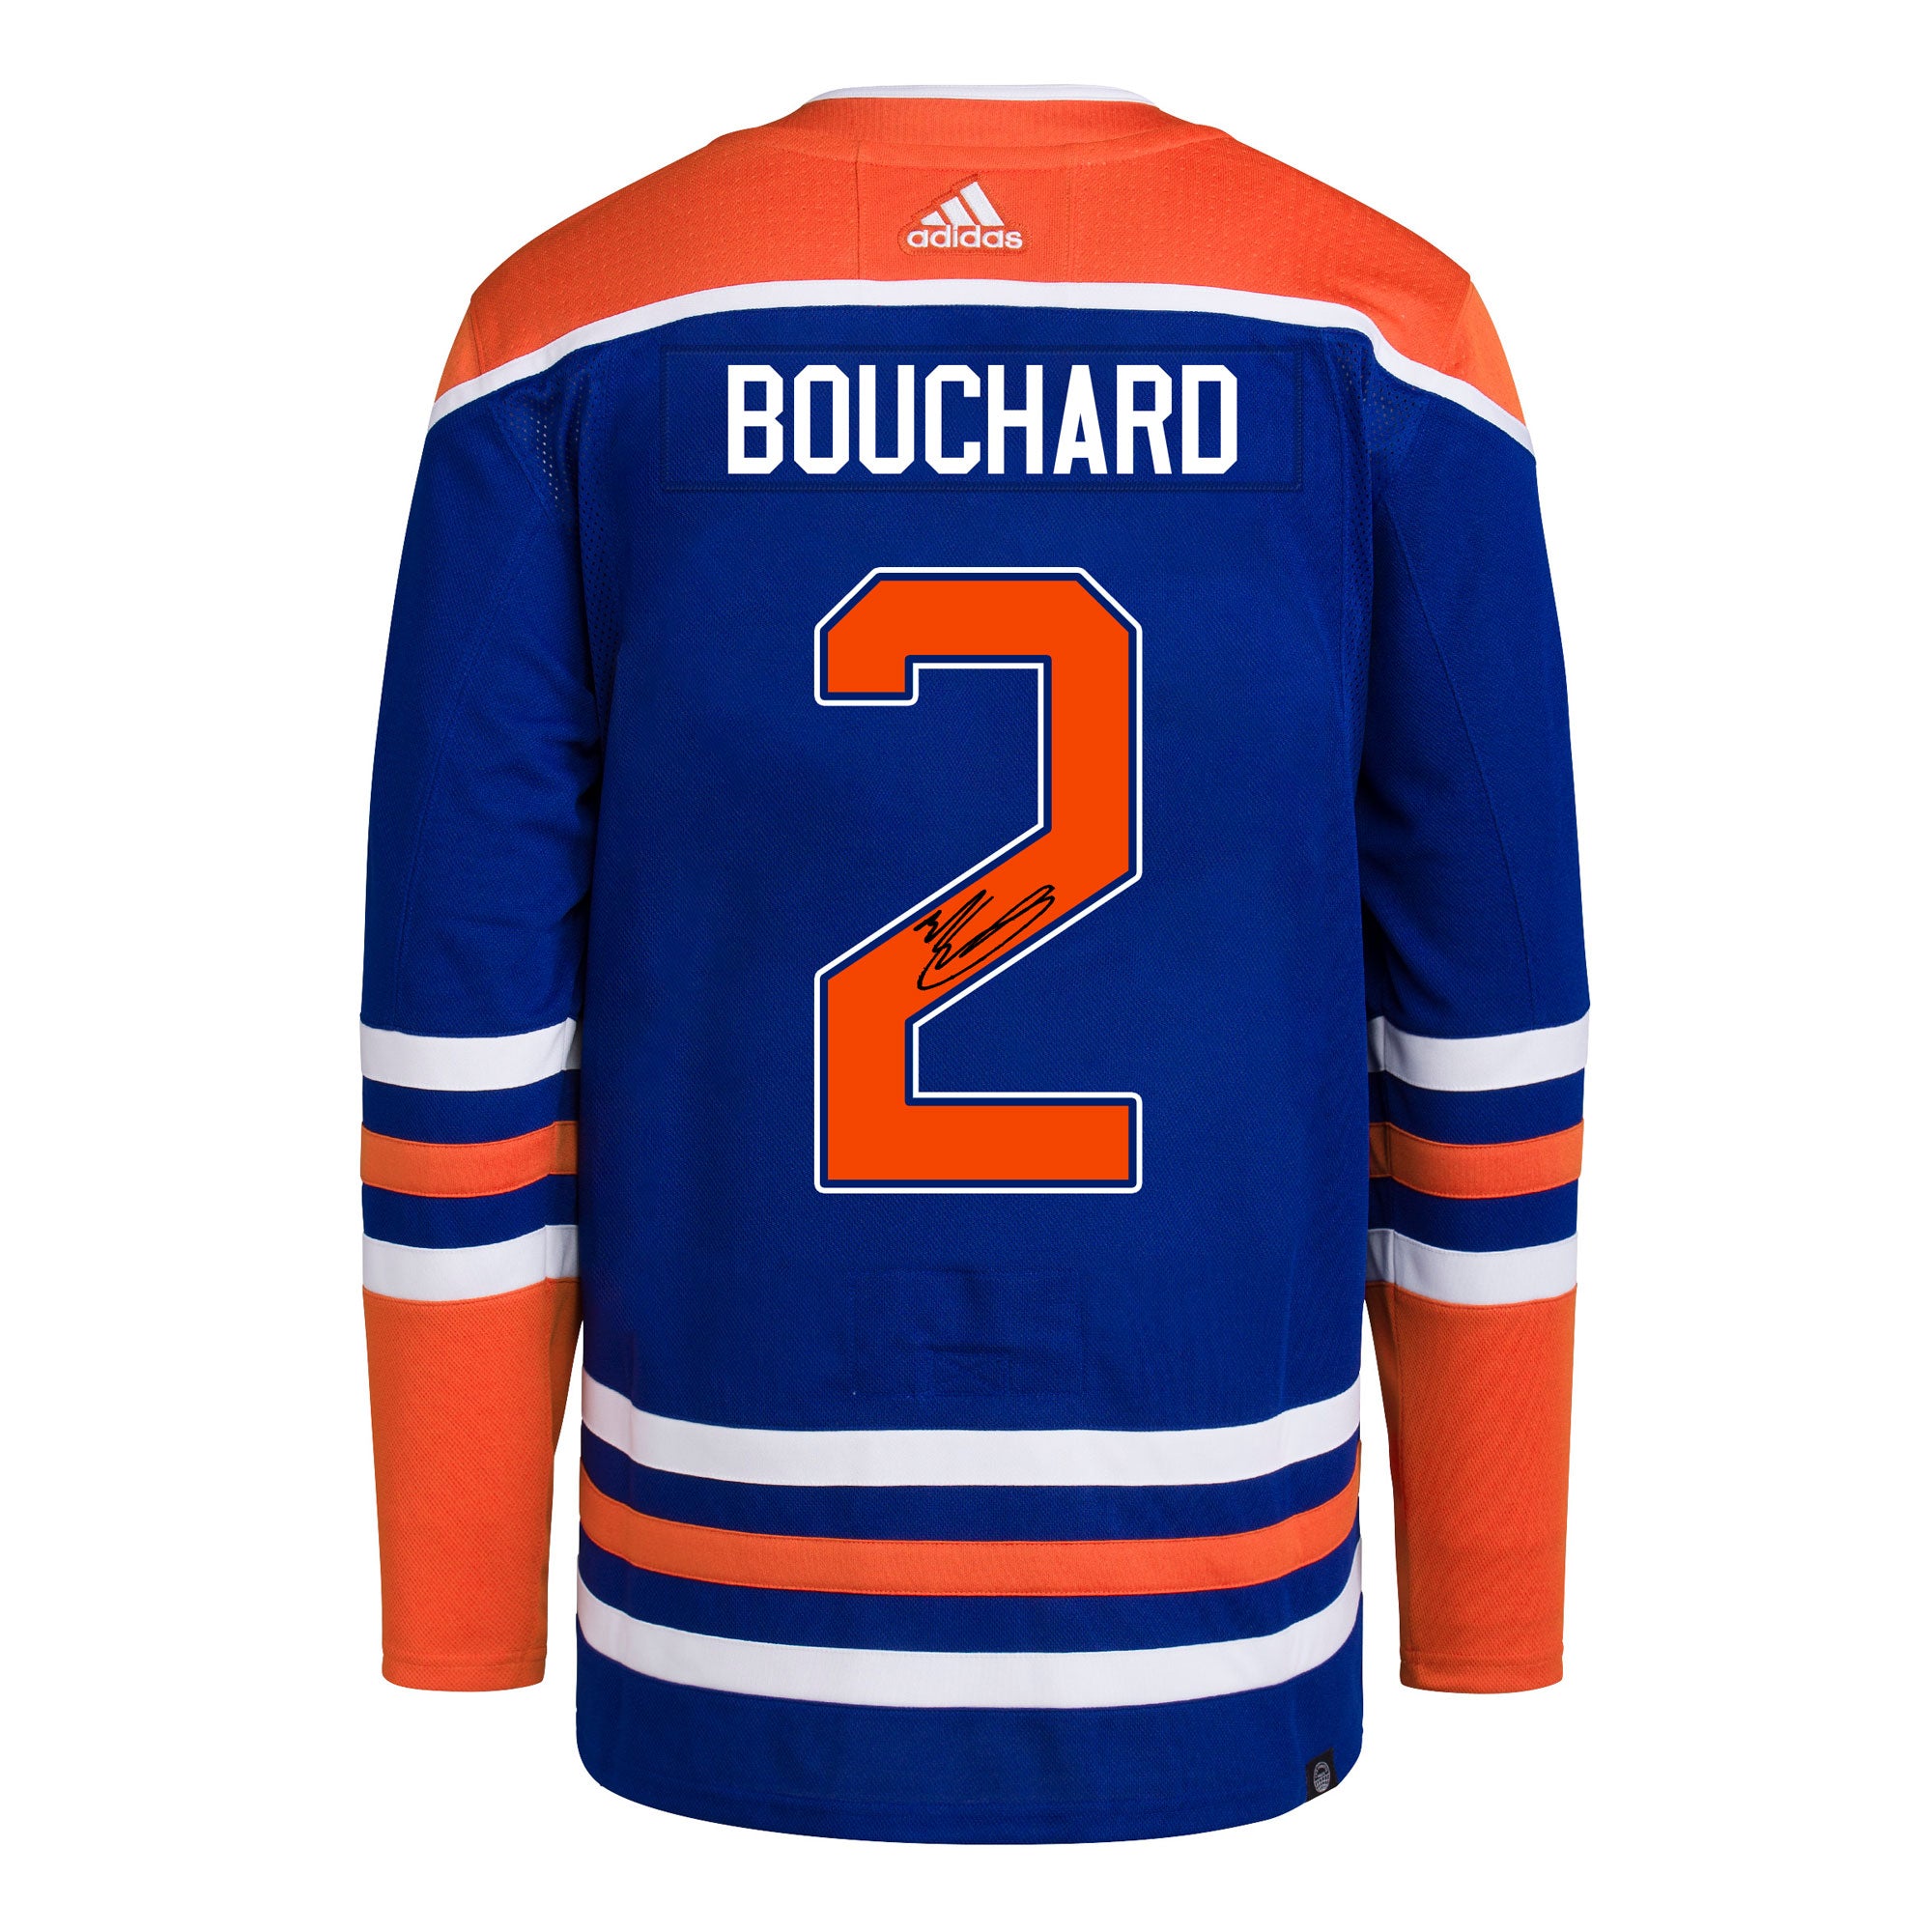 Lids Evan Bouchard Edmonton Oilers Fanatics Authentic Autographed 16'' x  20'' White Jersey with Puck Photograph